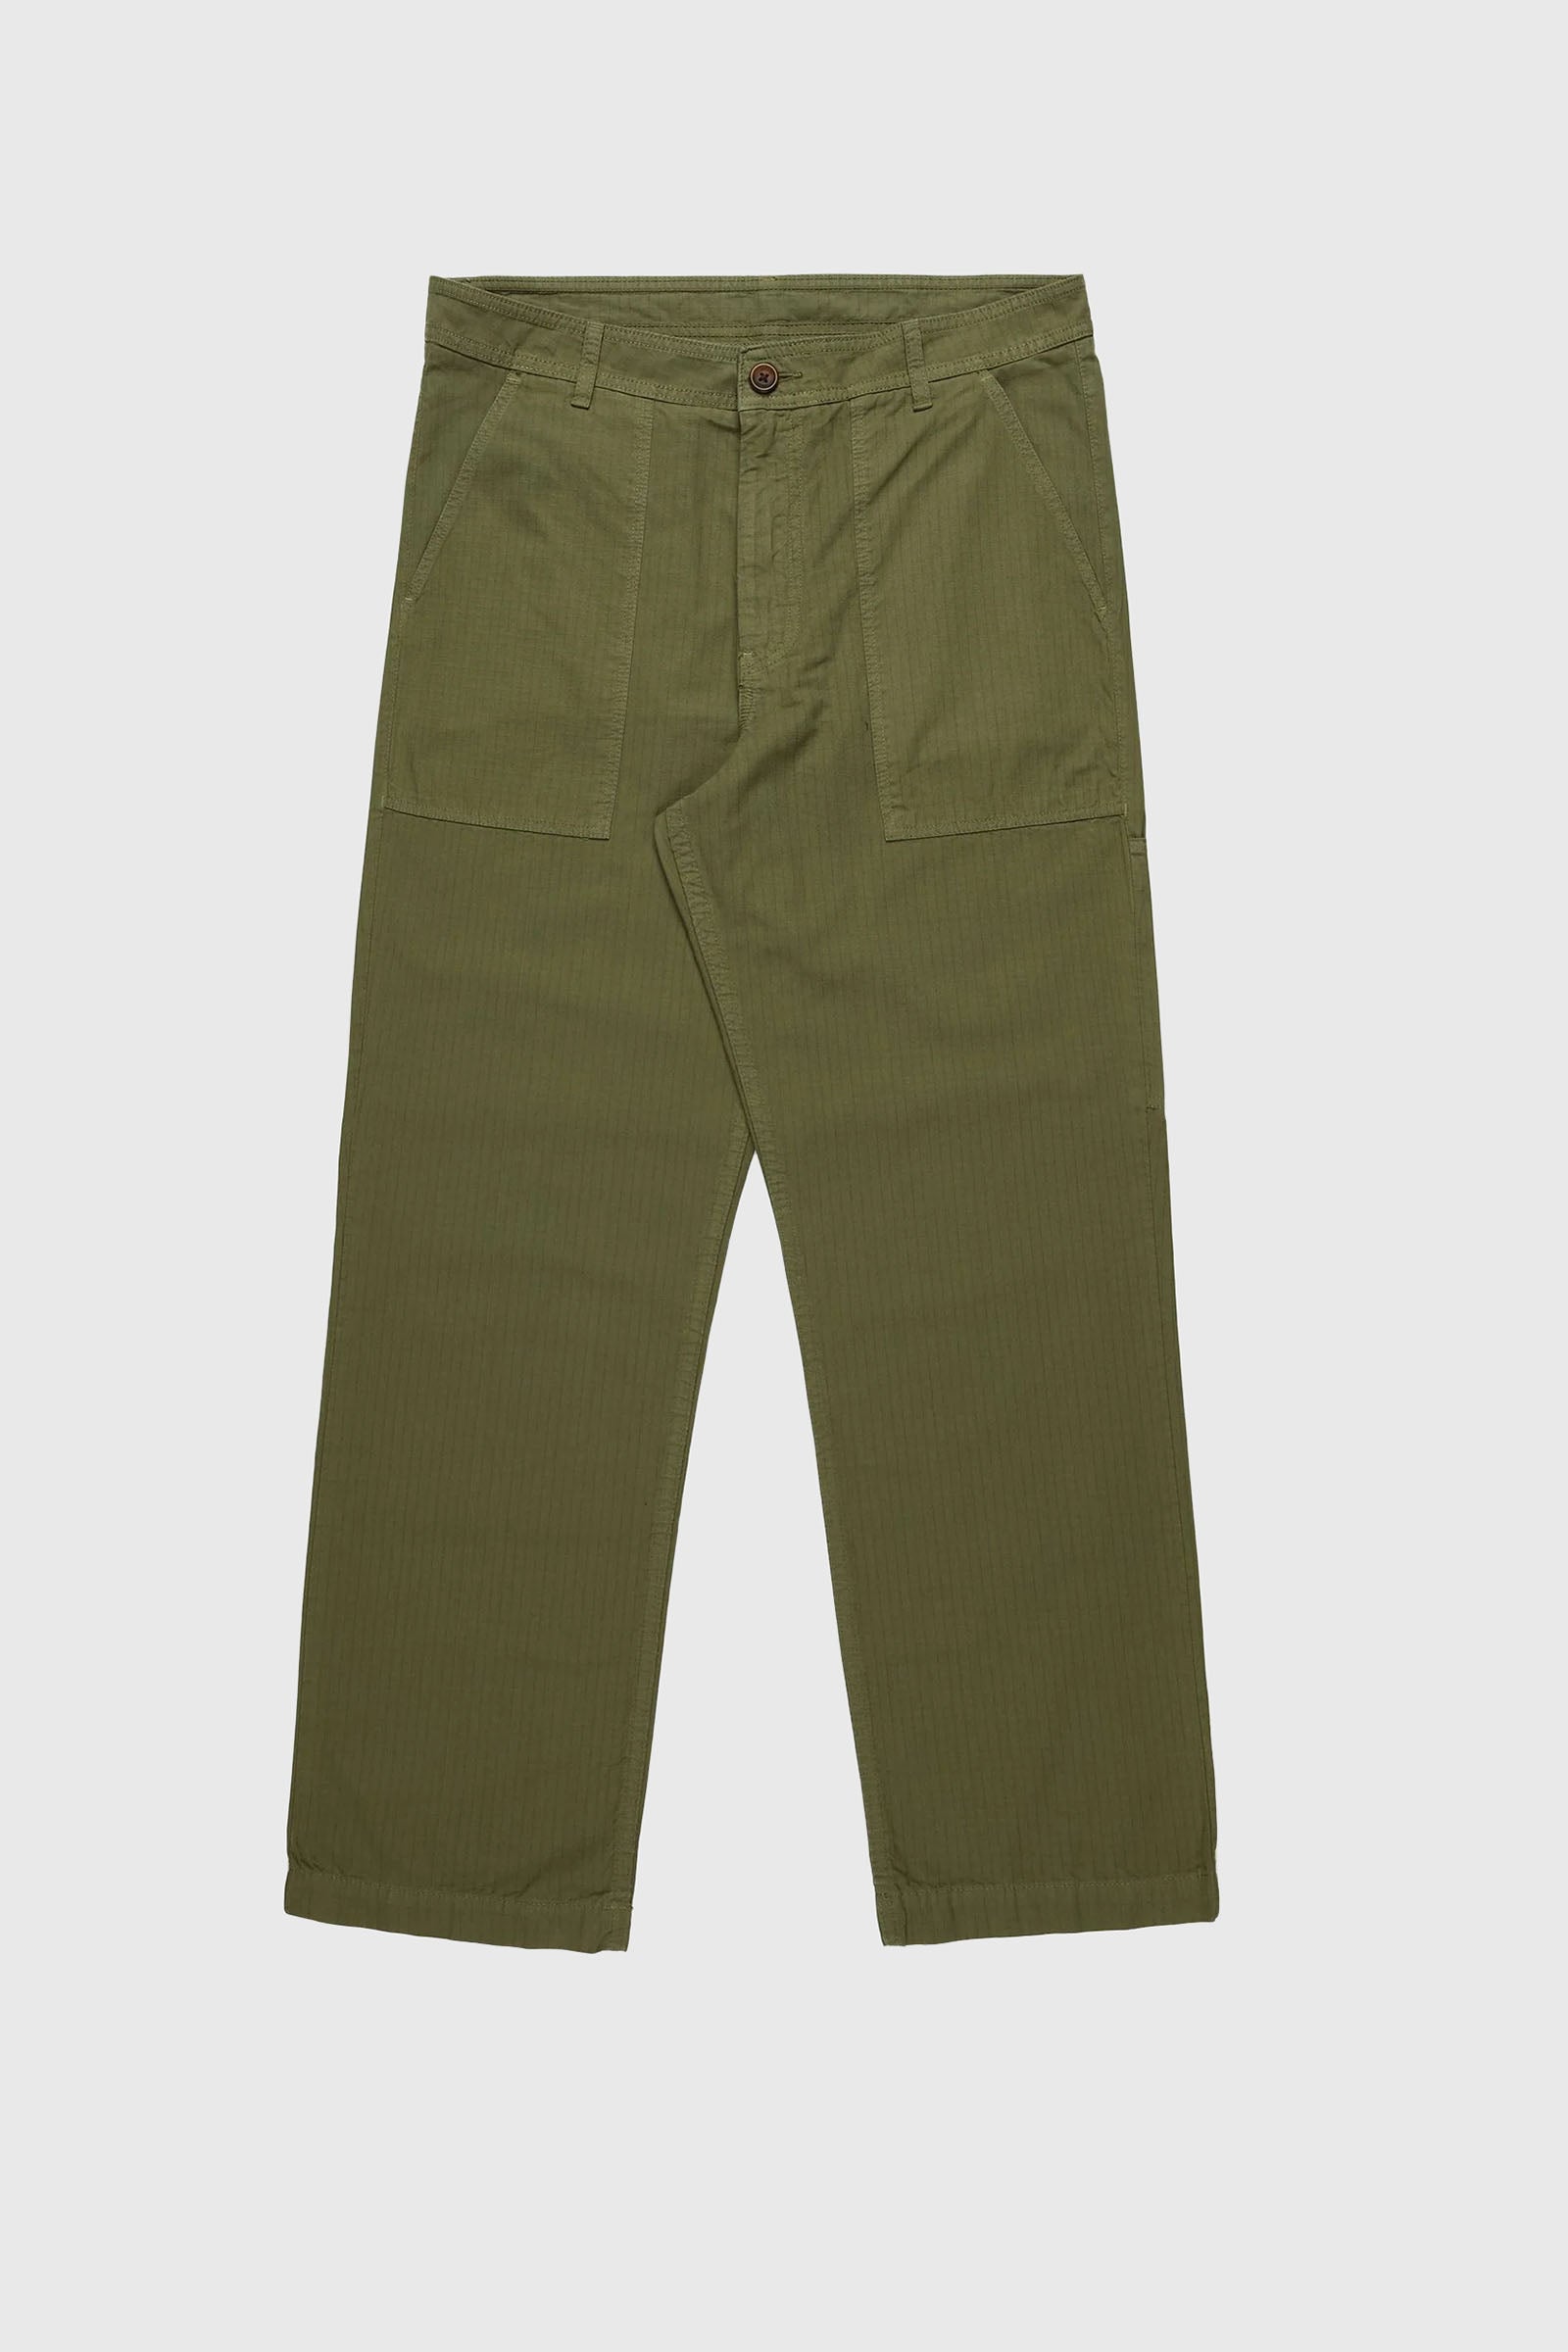 Sebago Pantalone Milton Verde Militare Uomo - 1